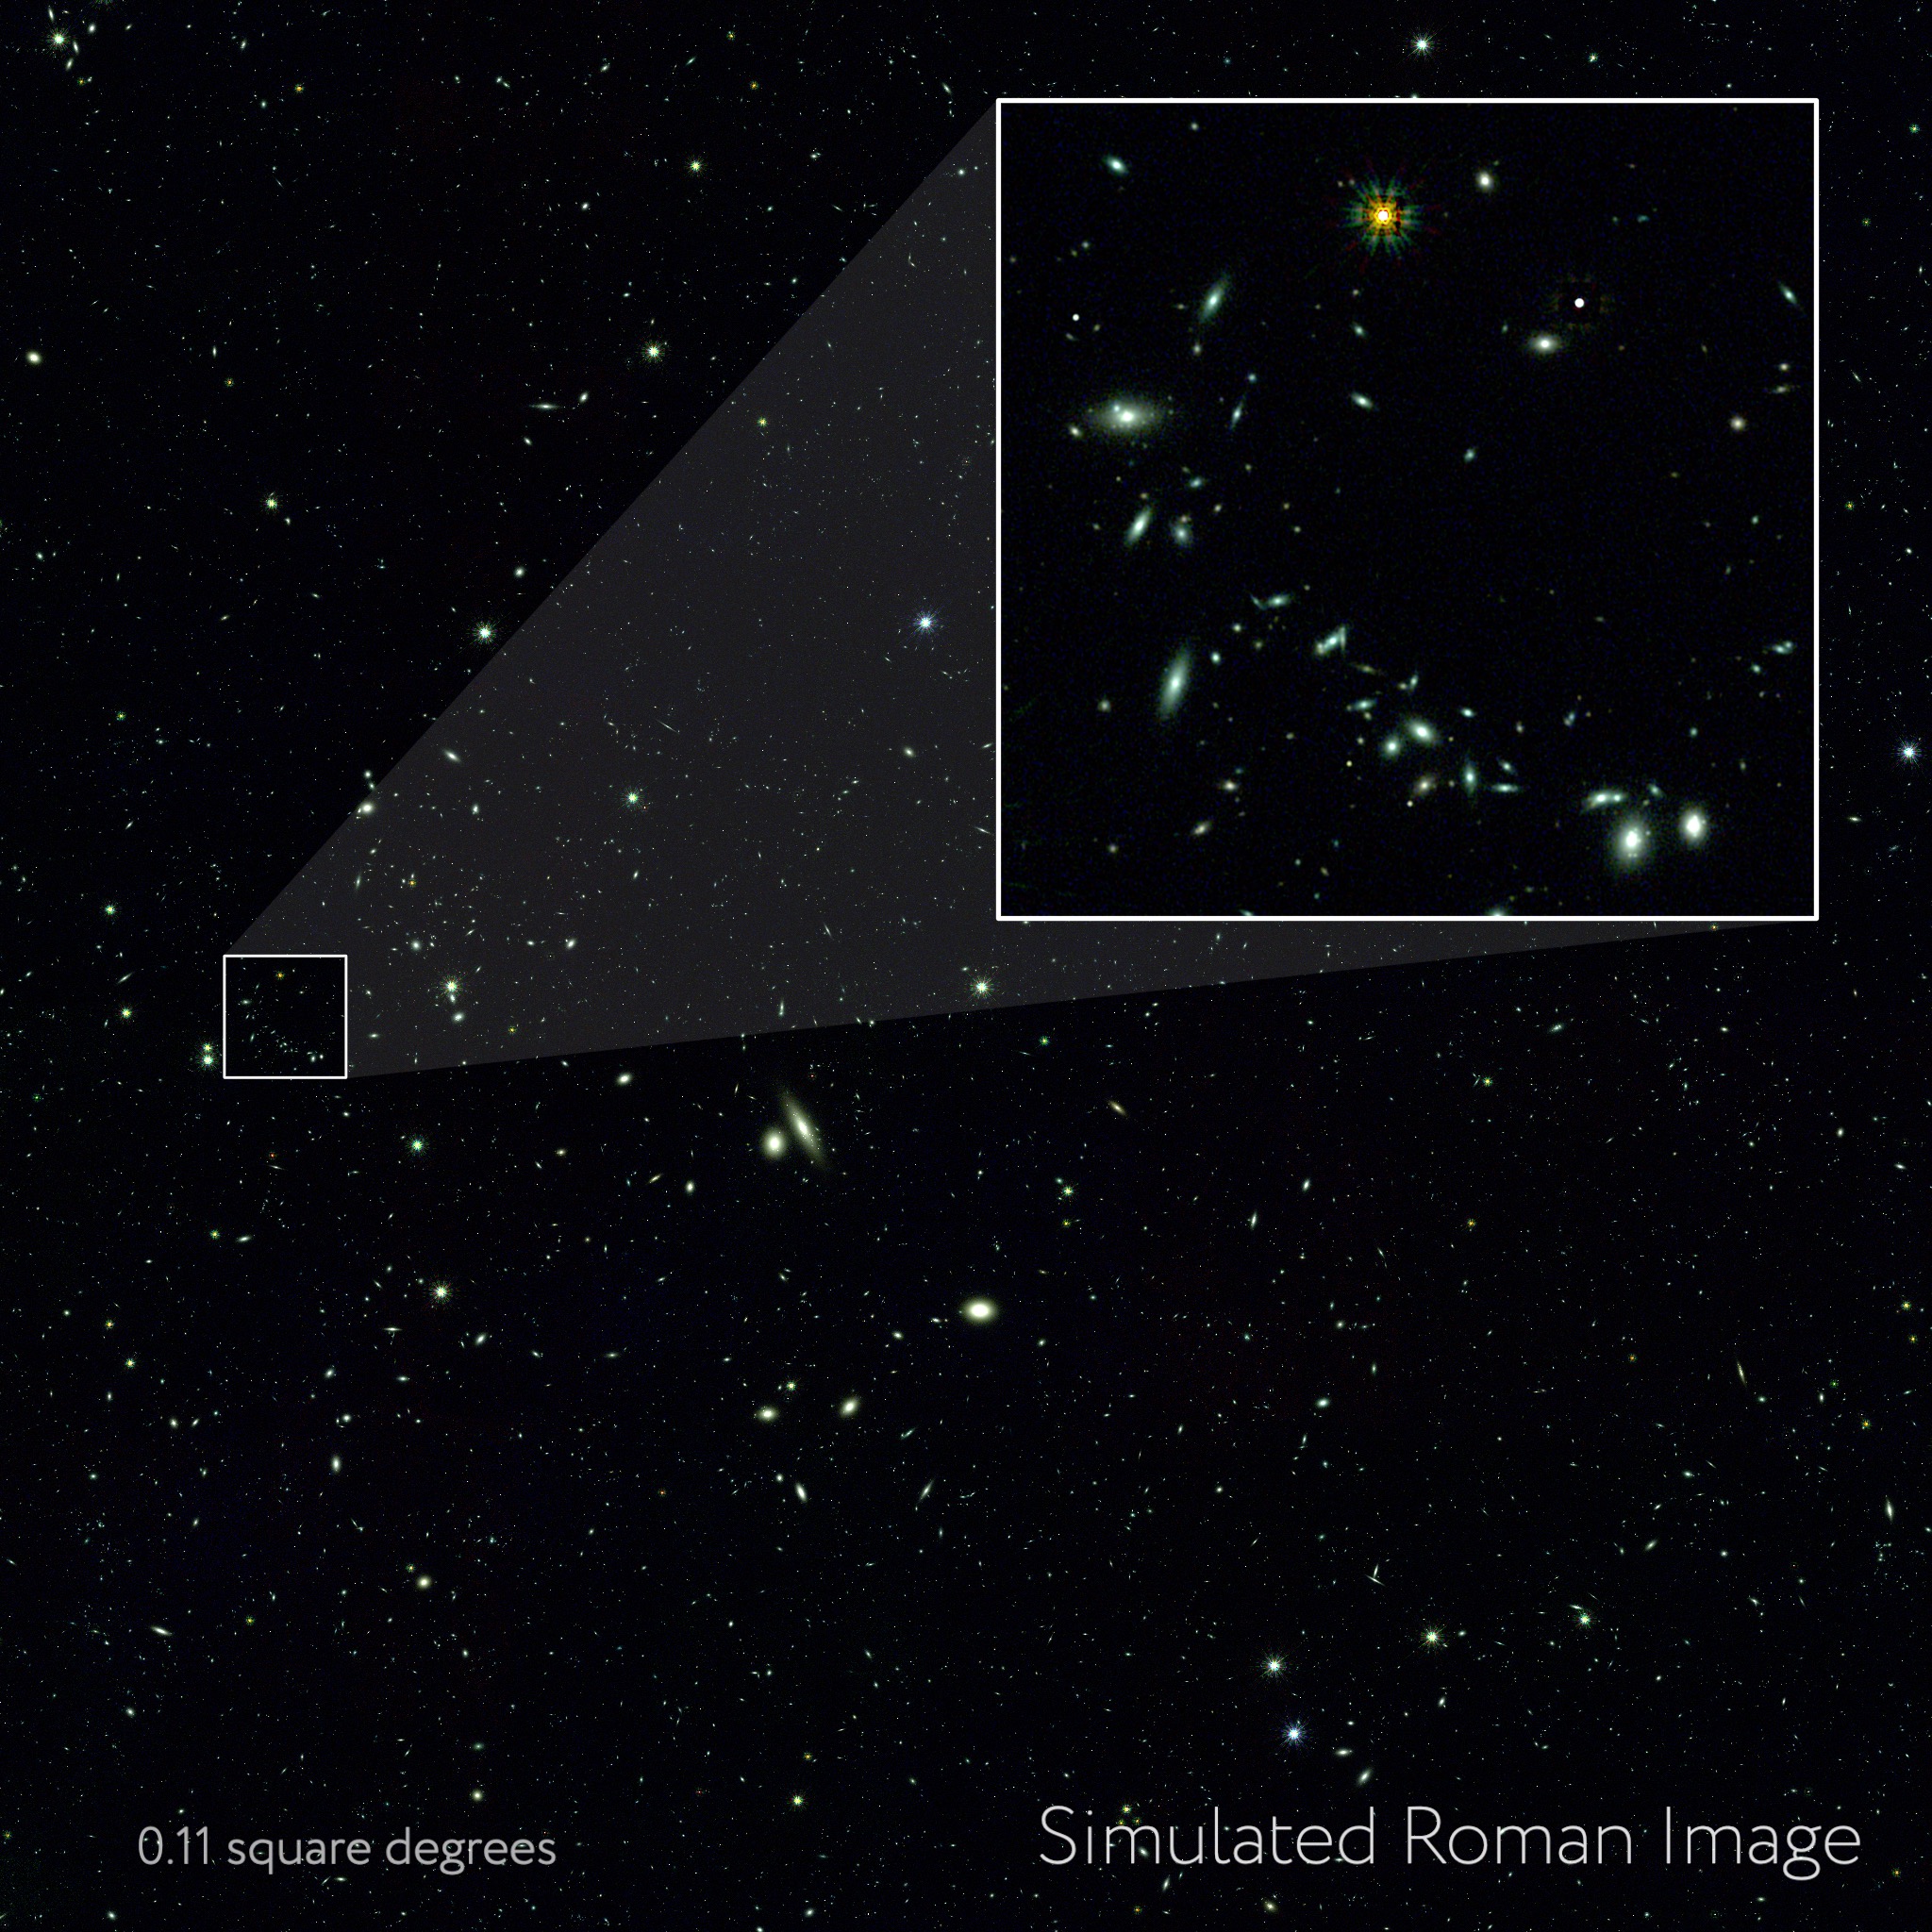 Simulated Roman image of galaxies